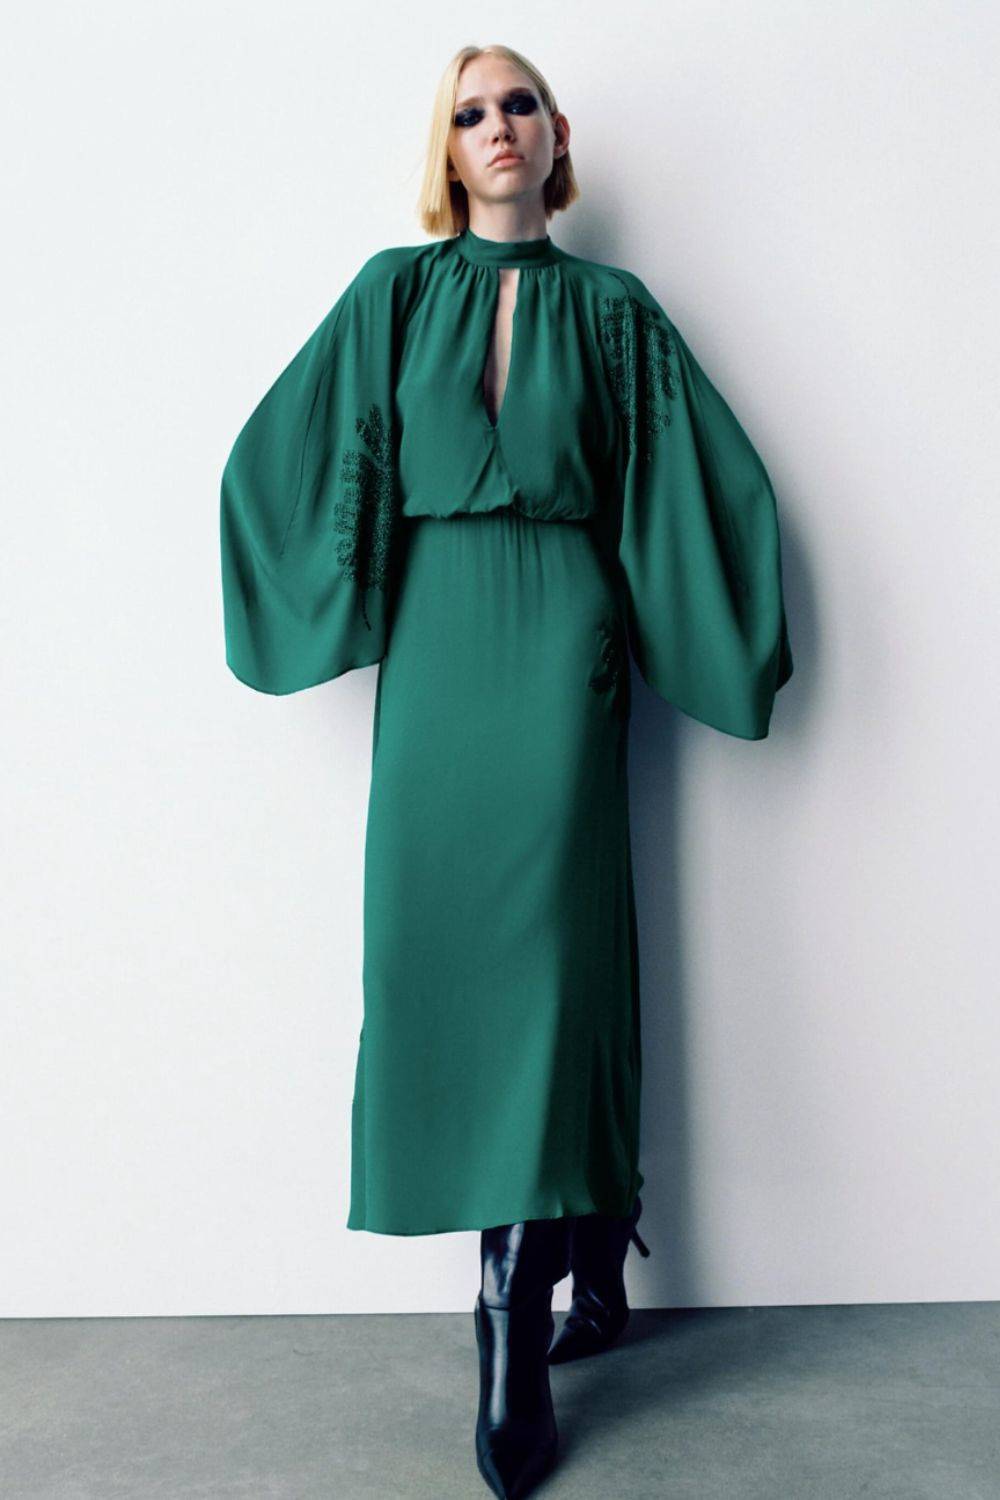 Vestido verde de estilo japonés